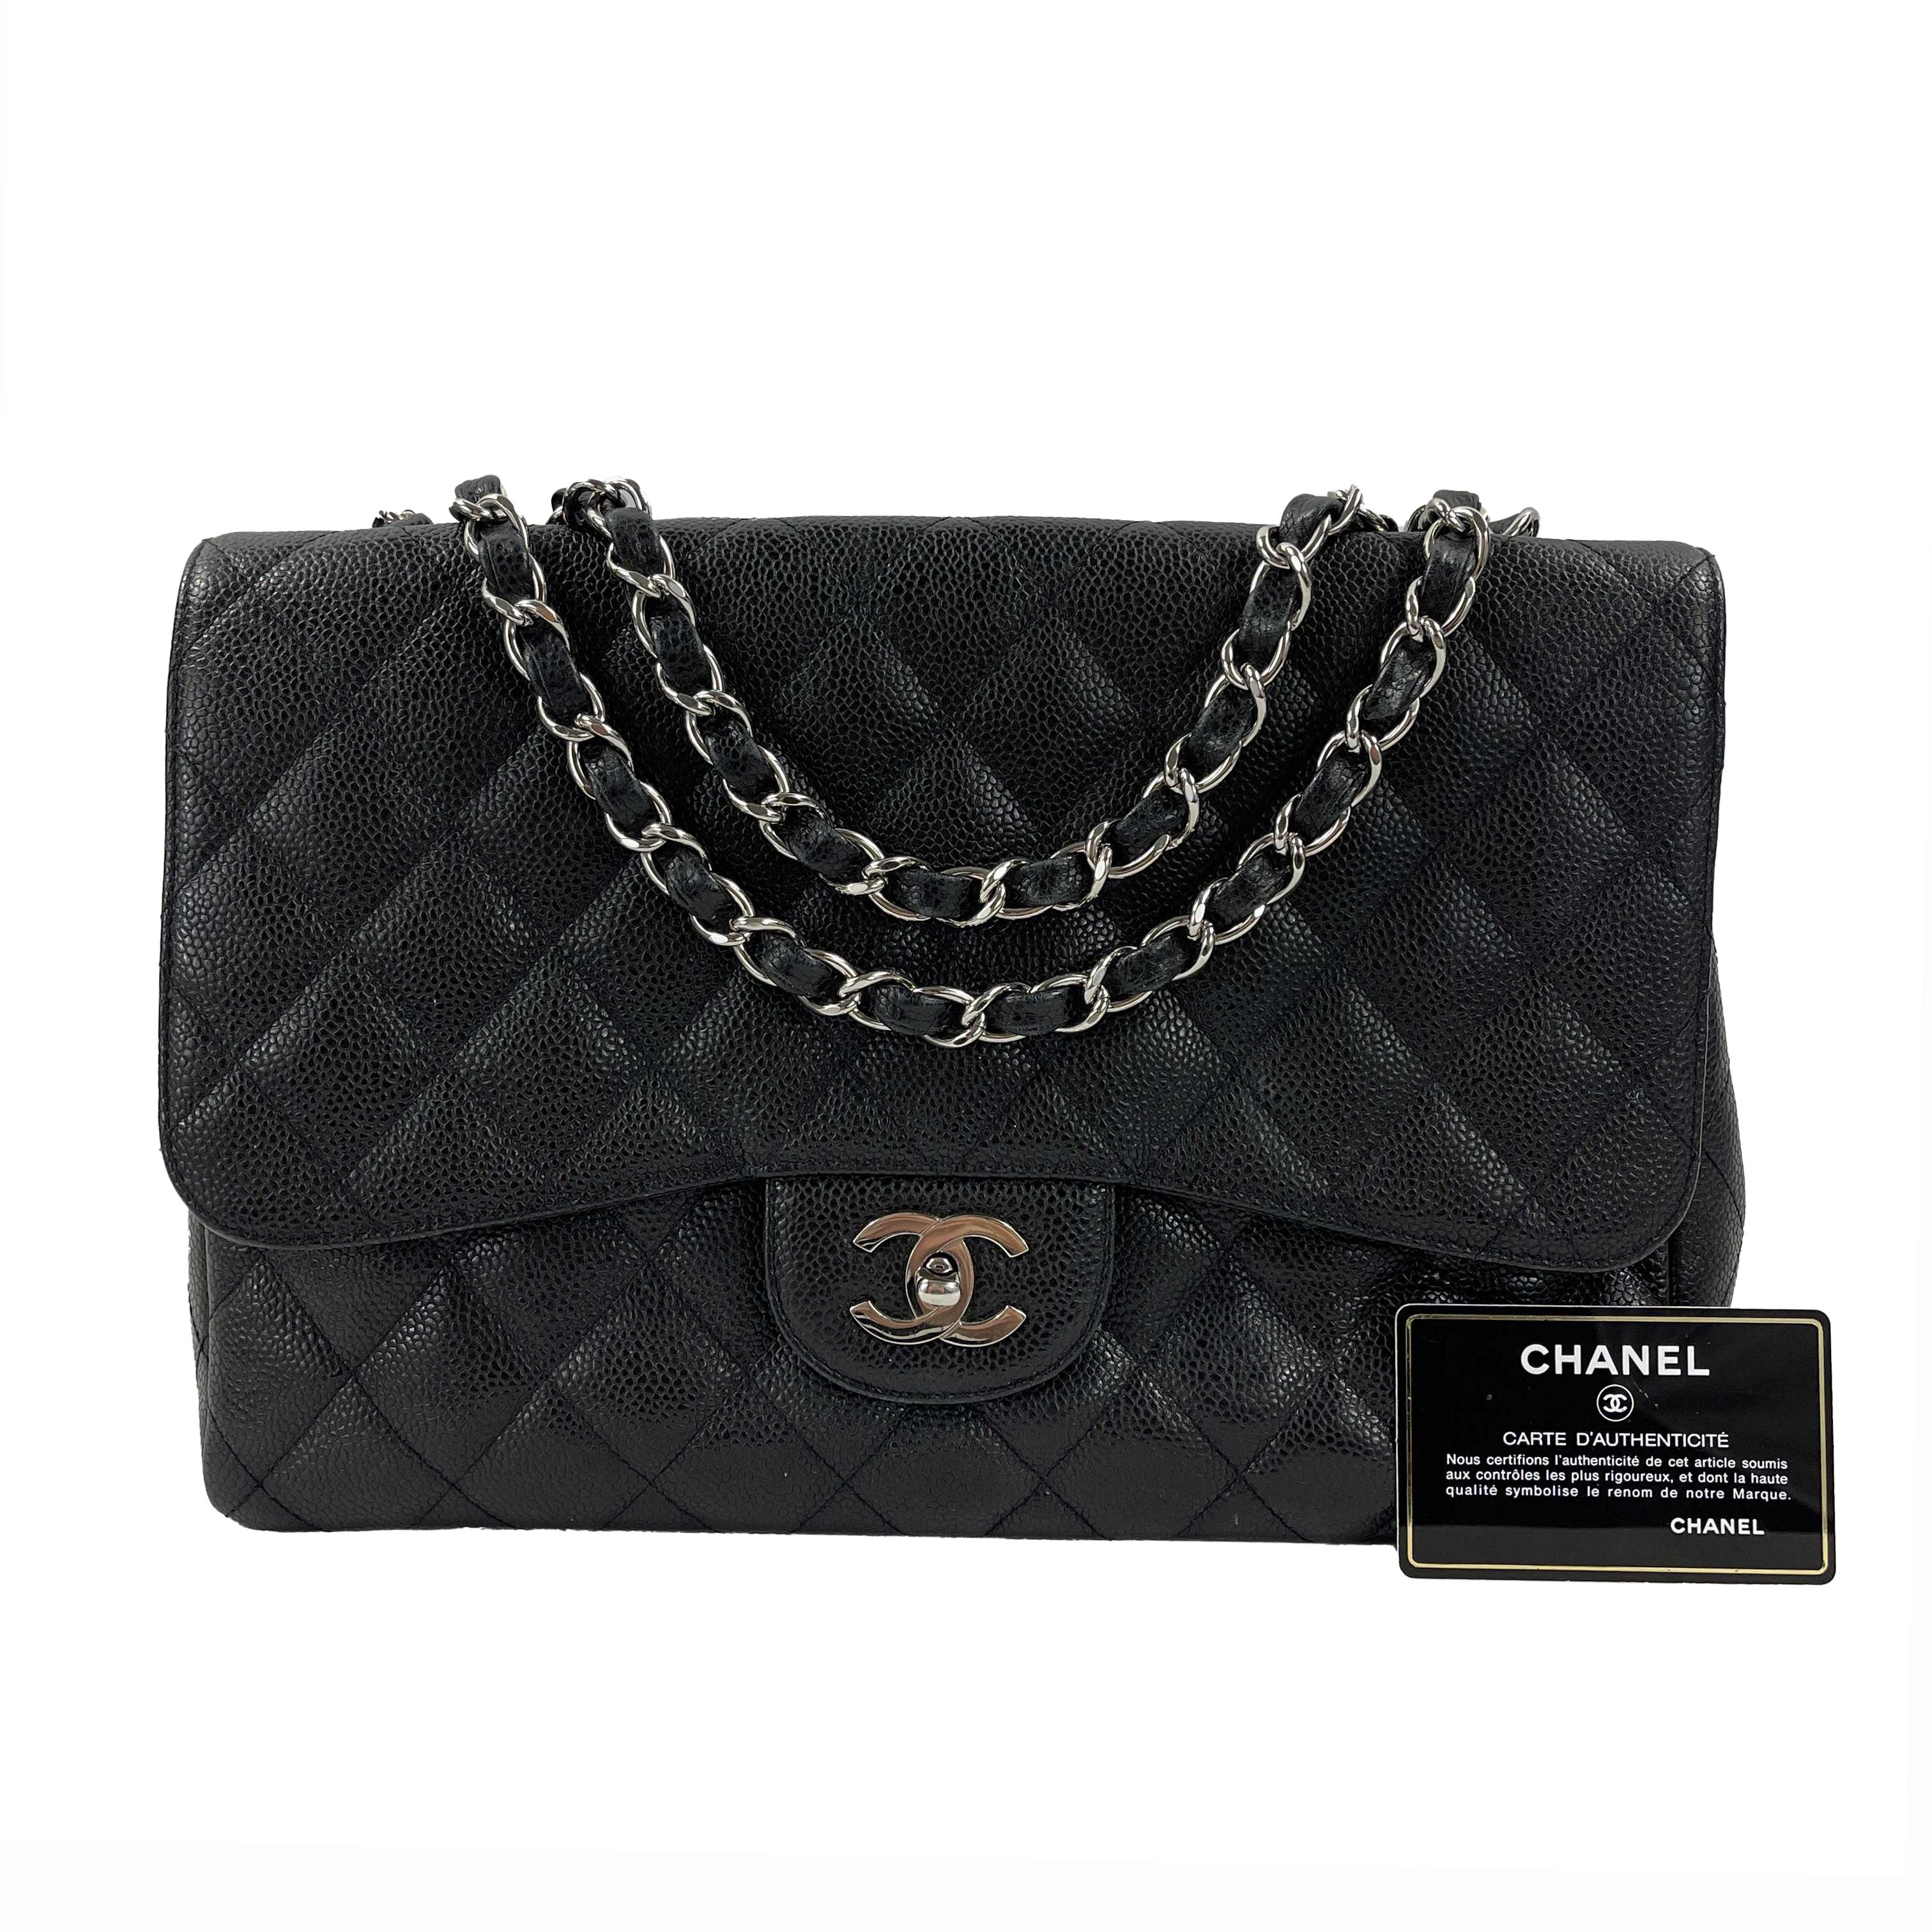 CHANEL - Jumbo Caviar Leather CC Classic Flap - Black / Silver Shoulder Bag 1